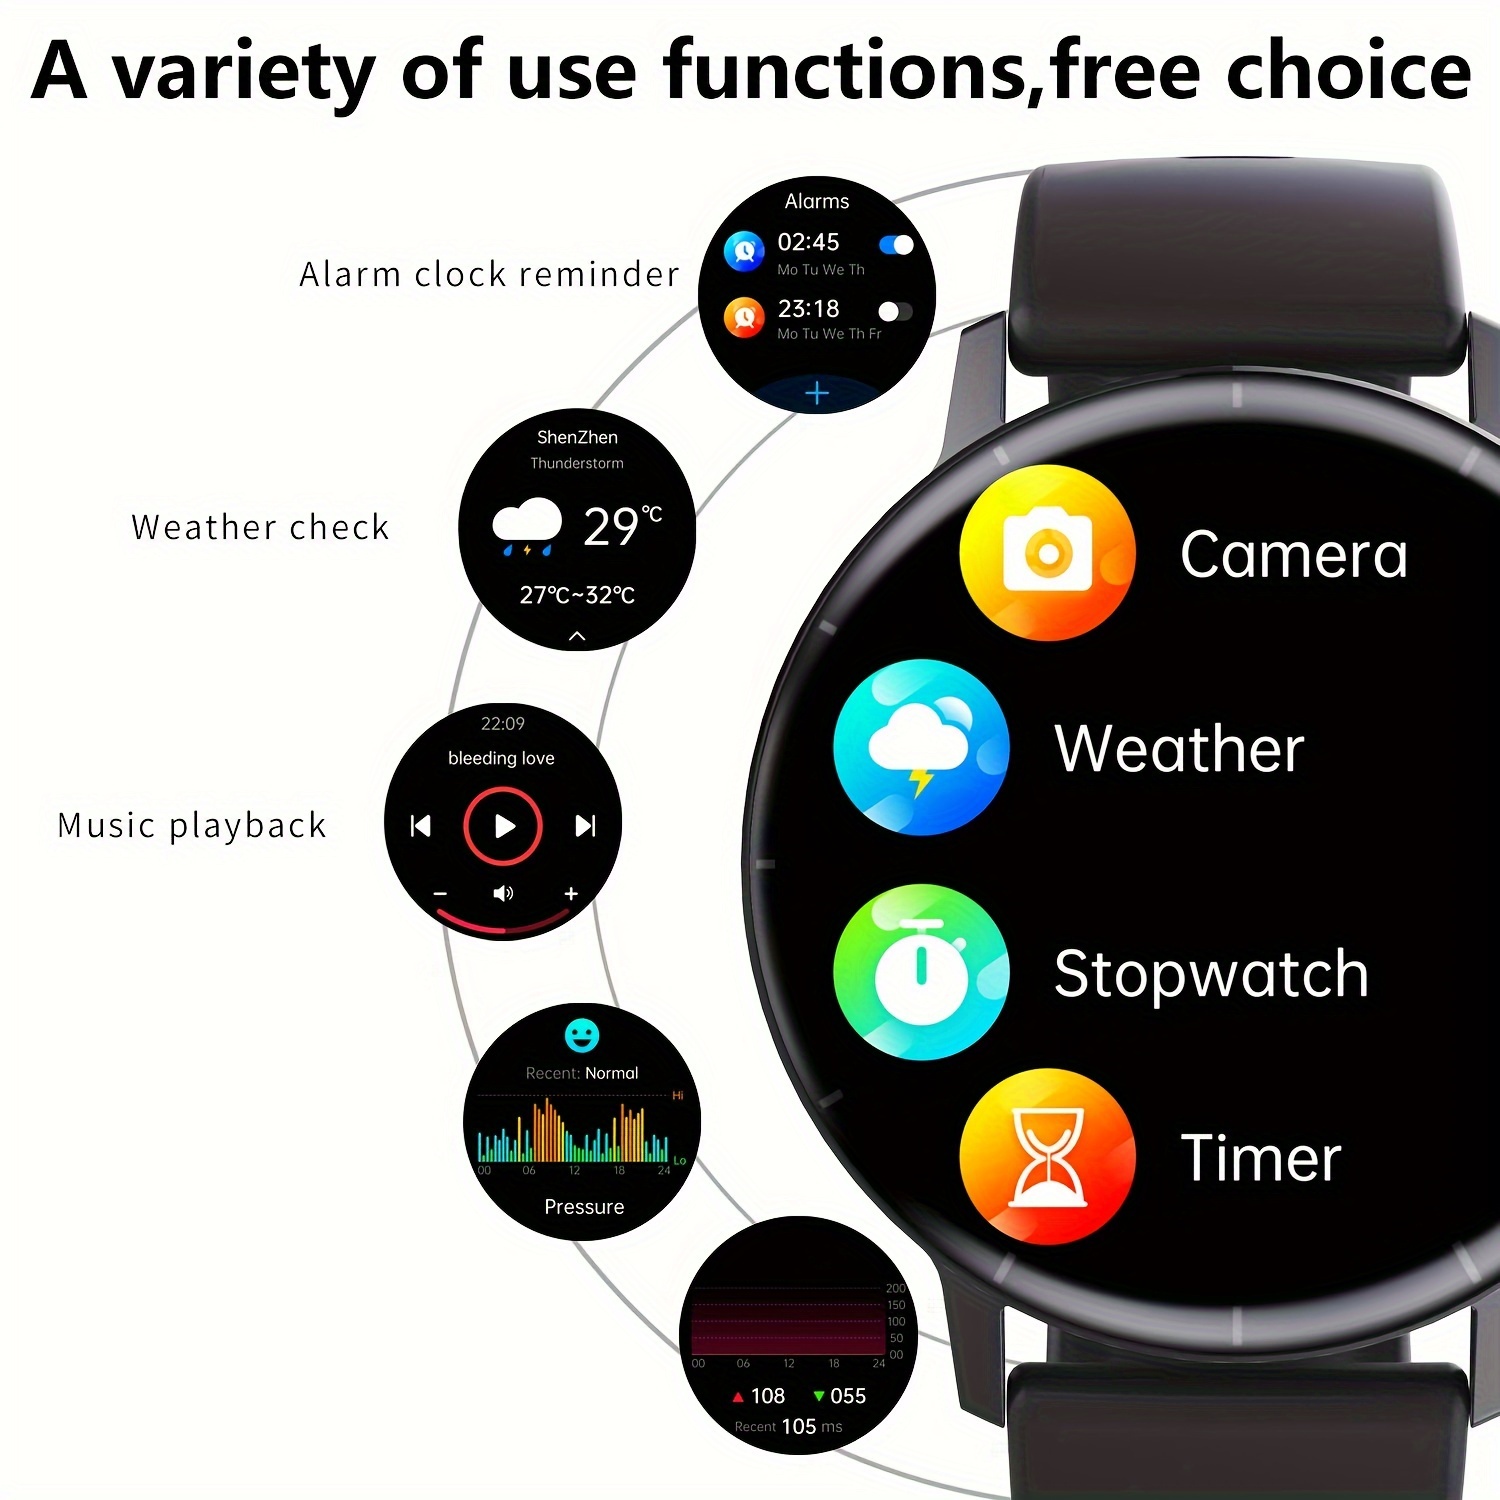 MEGAFFARI - TESOFIT Smartwatch 1.3'AMOLED HD Display